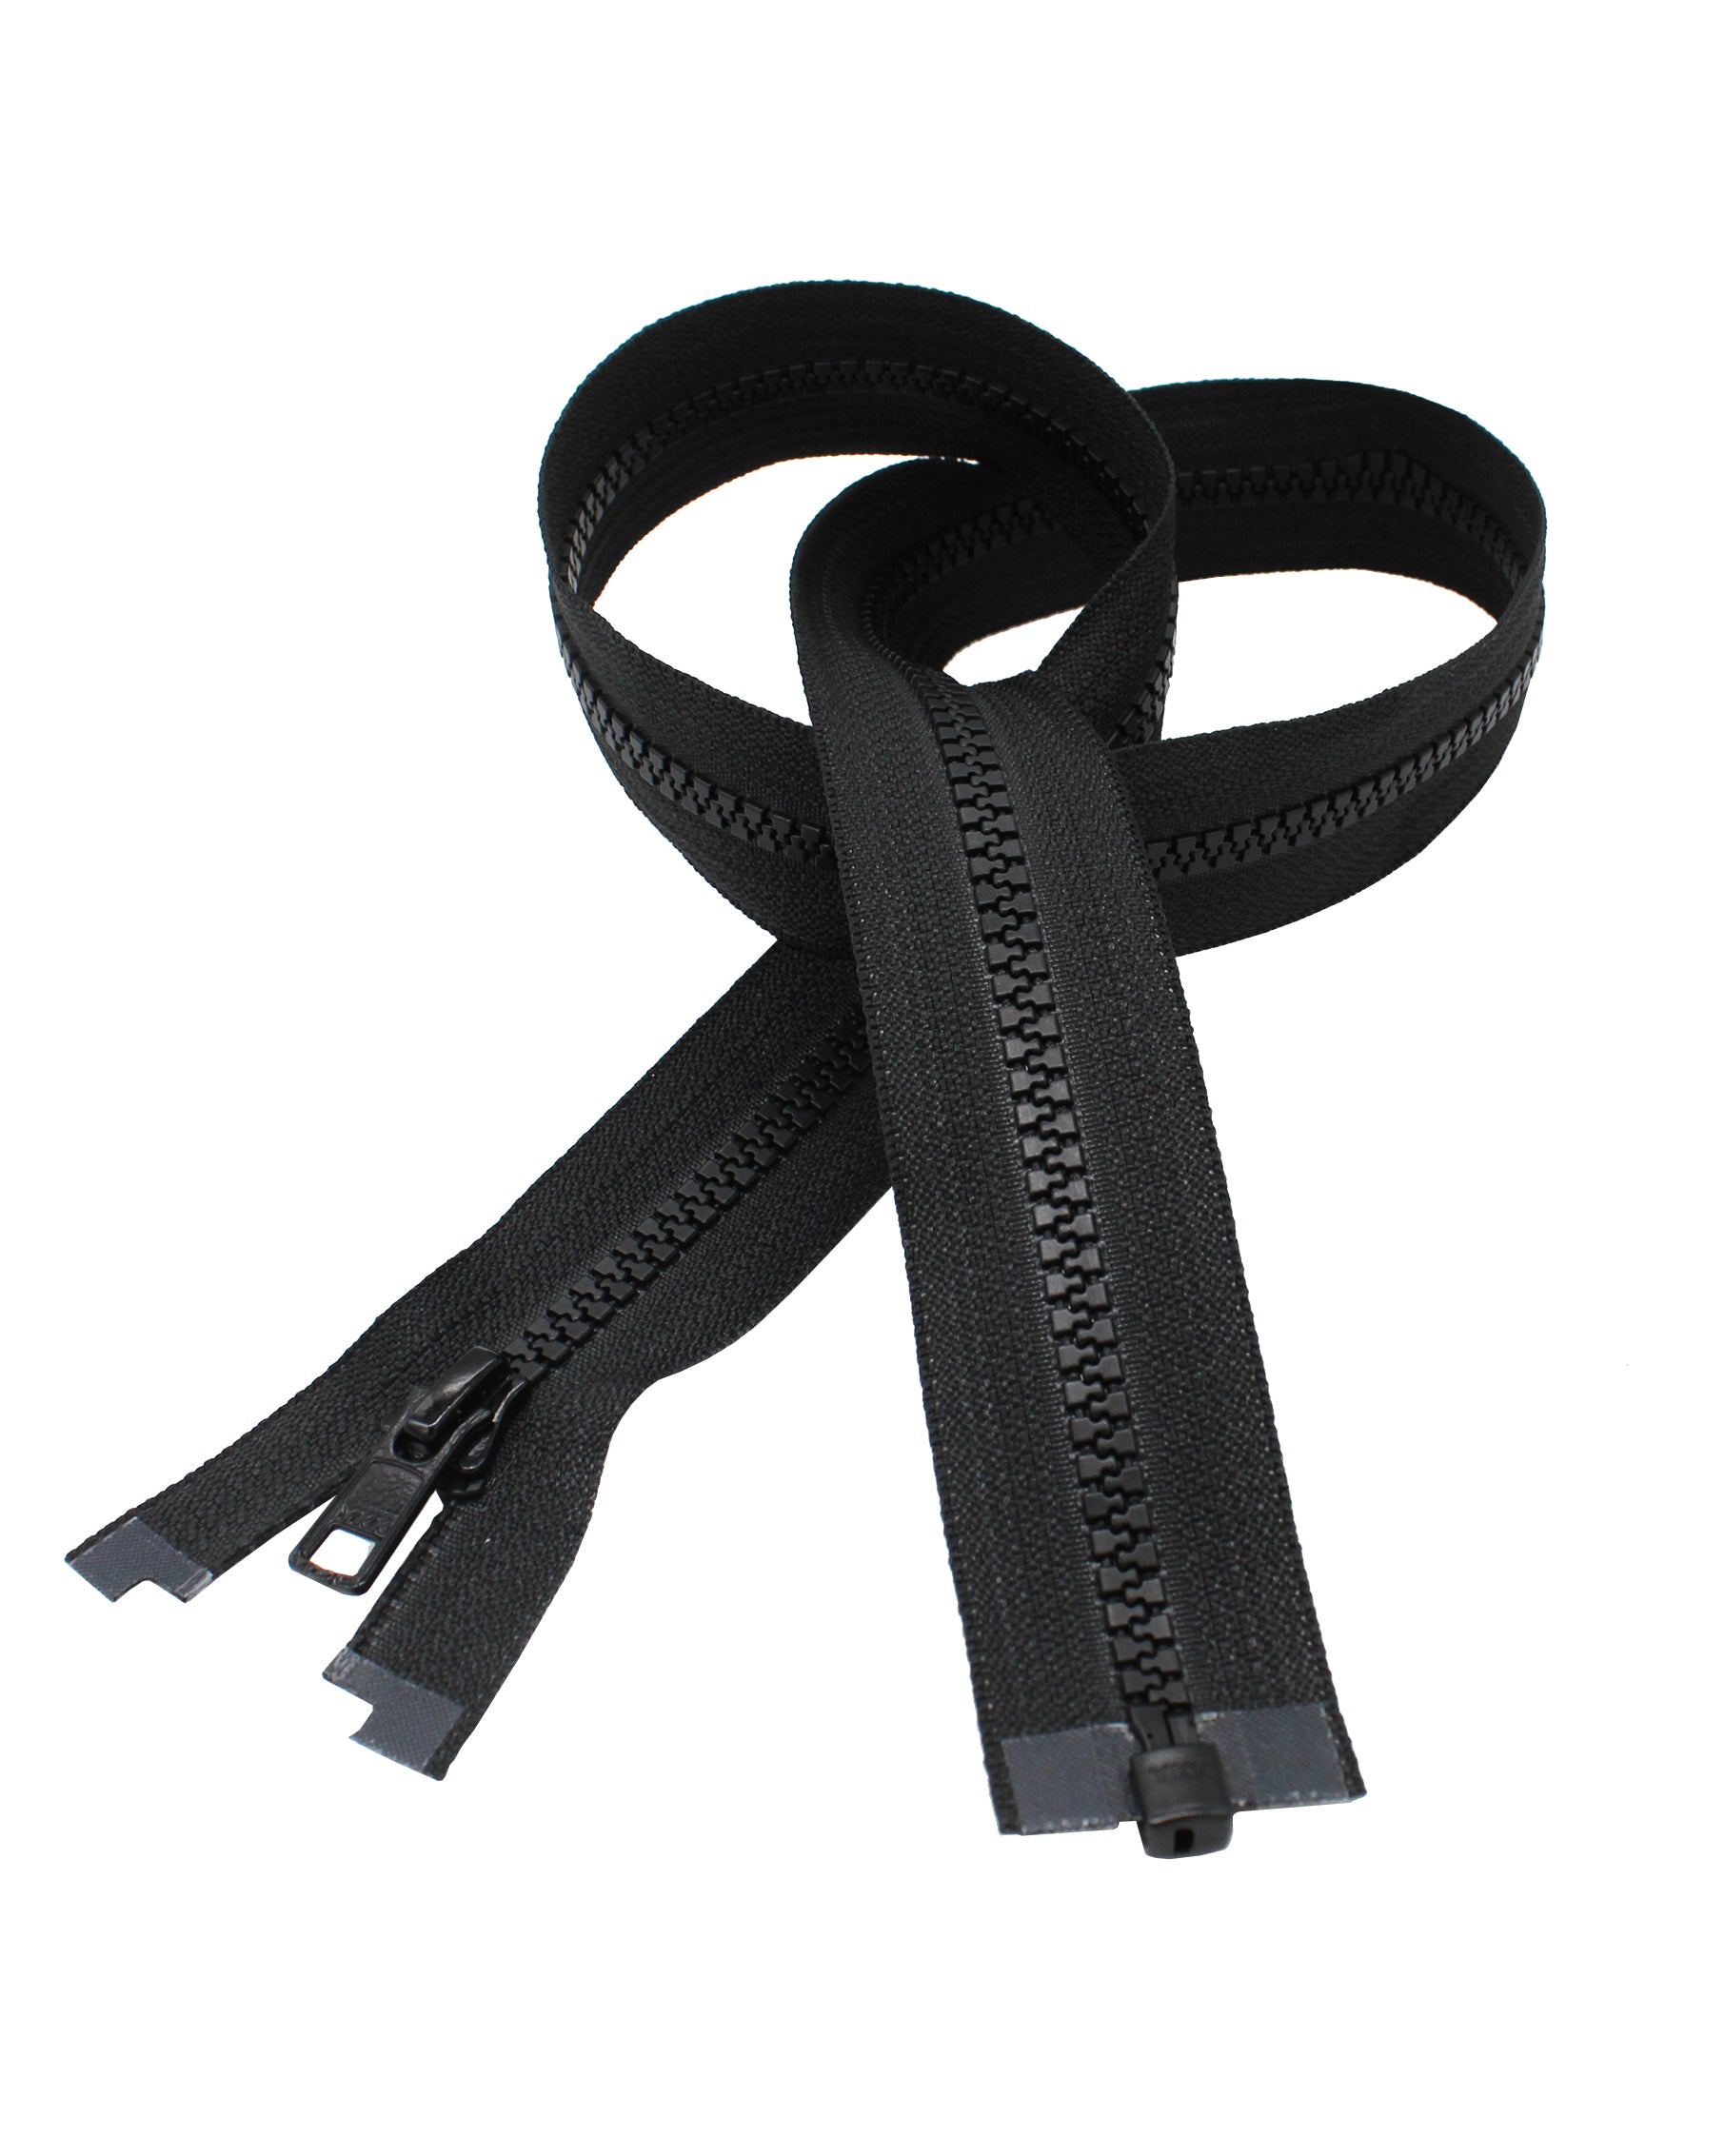 Lenzip #8 Zipper Separating Vislon LIFETIME GUARANTEE